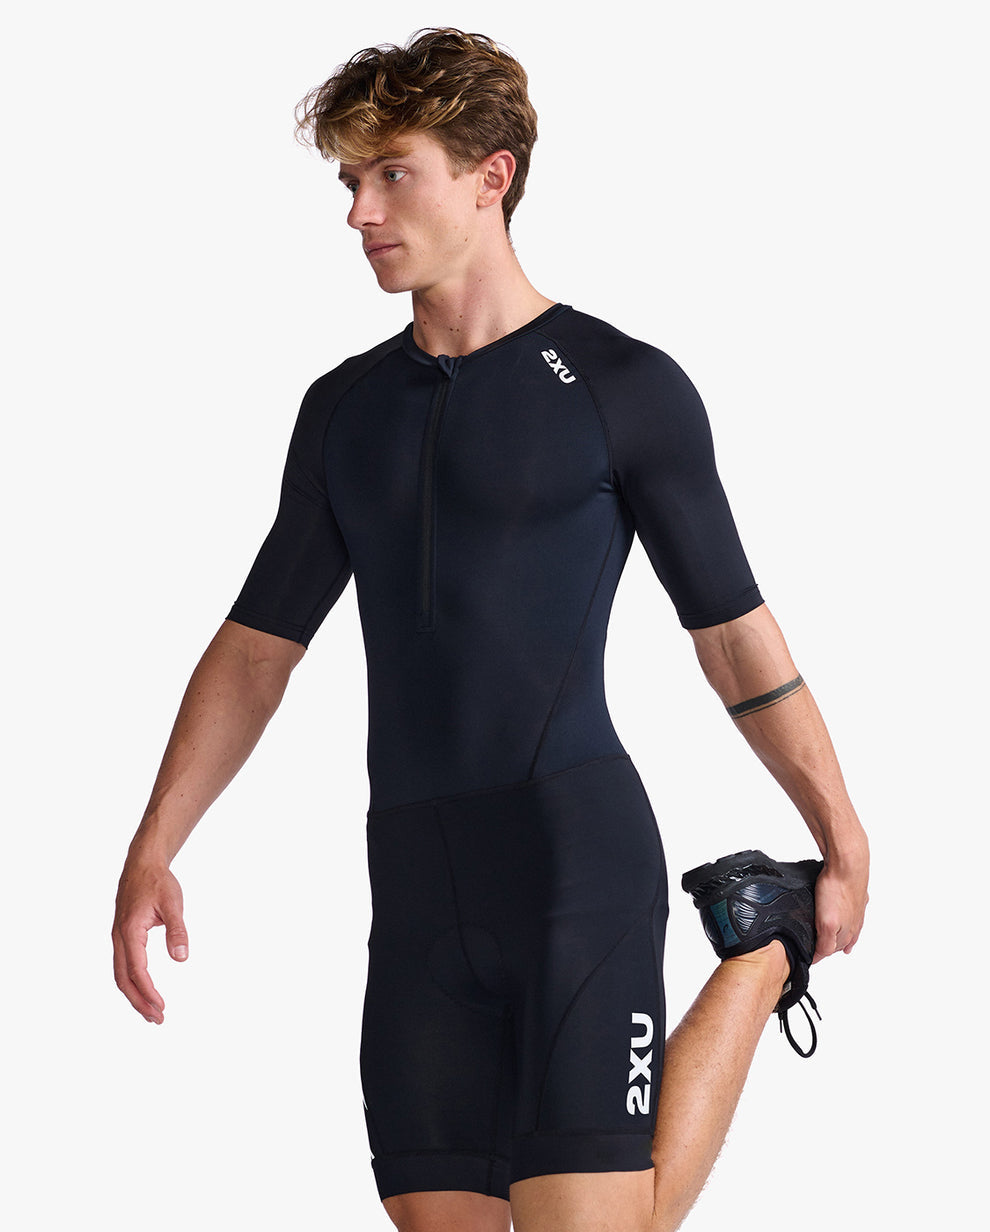 2XU Core Sleeved Men's Cycling Trisuit (Black/White)